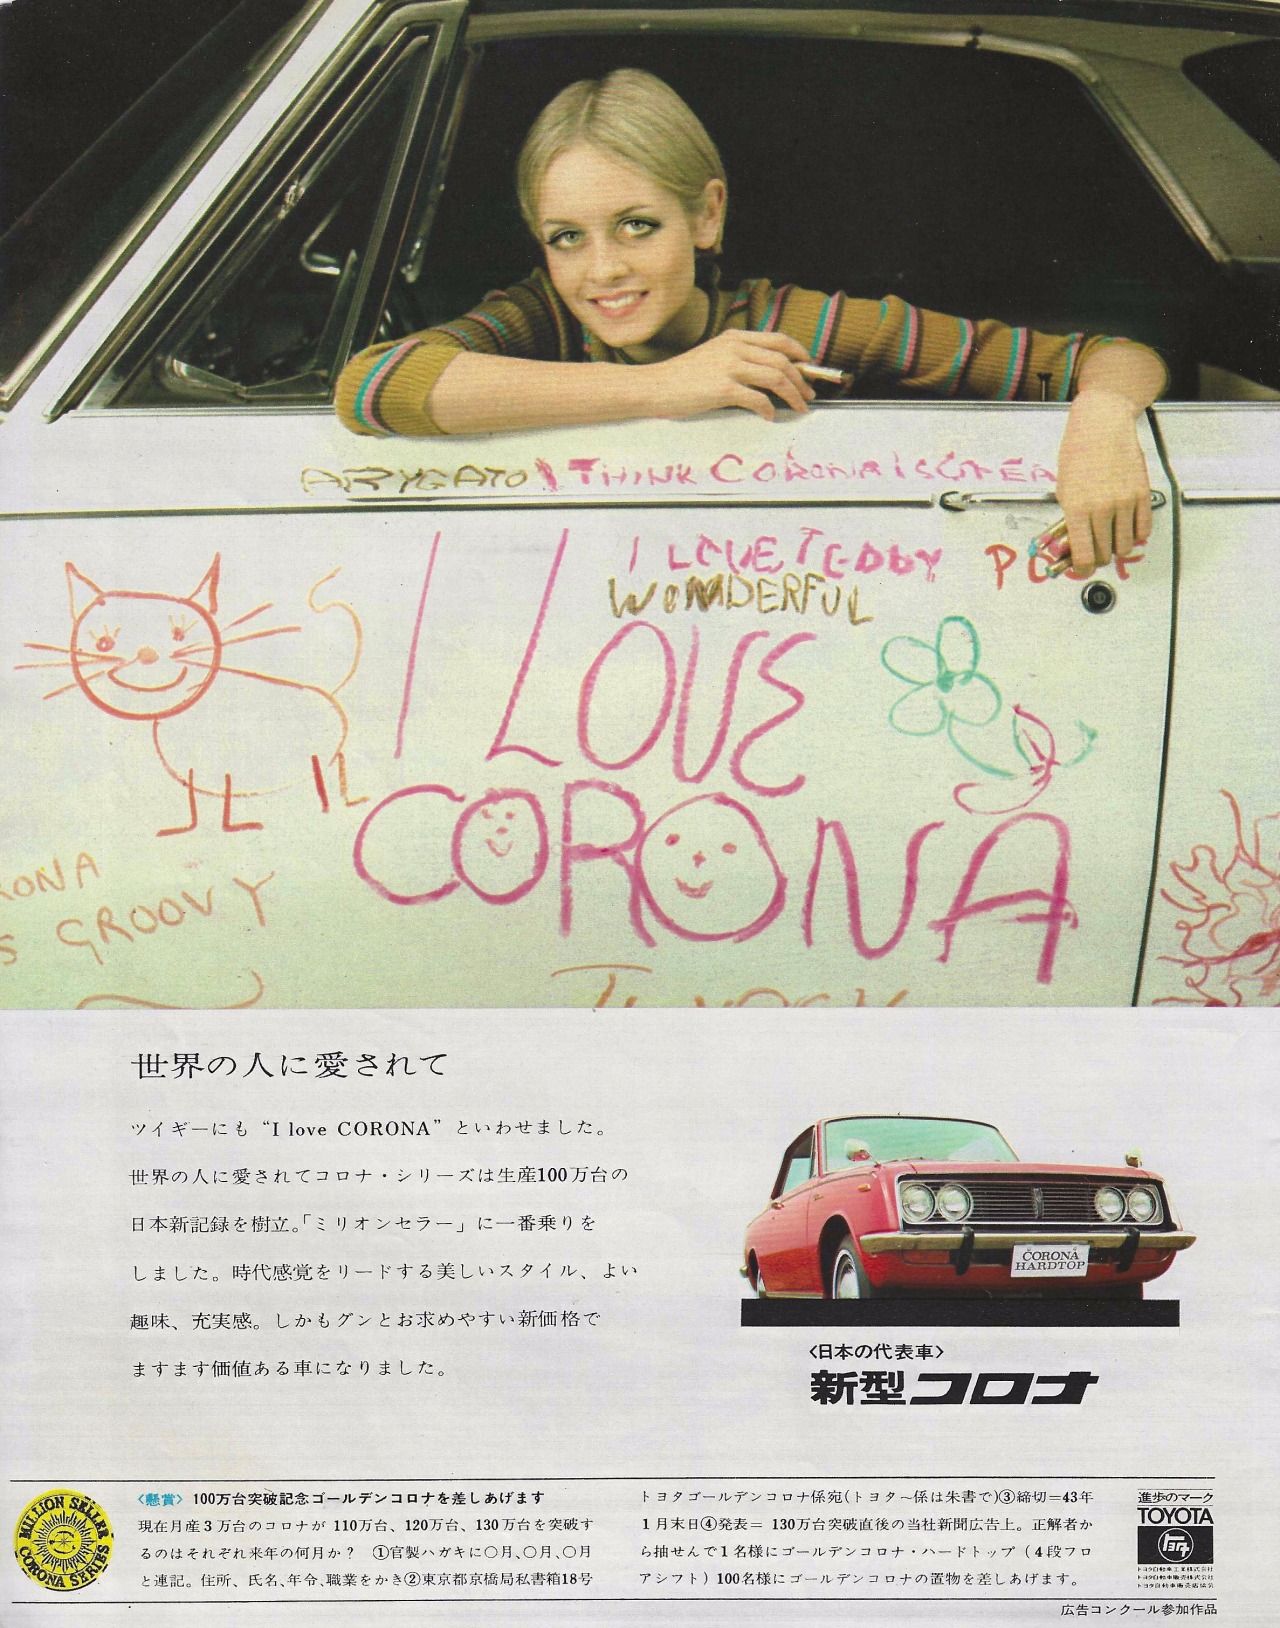 devon-aoki:
“scumfuckus:
“holythefirm:
“risu75:
“Twiggy Toyota Corona Japan ad, 1966
”
Twiggy…no..
”
seriously twiggy read the room
”
she’s so real for this
”